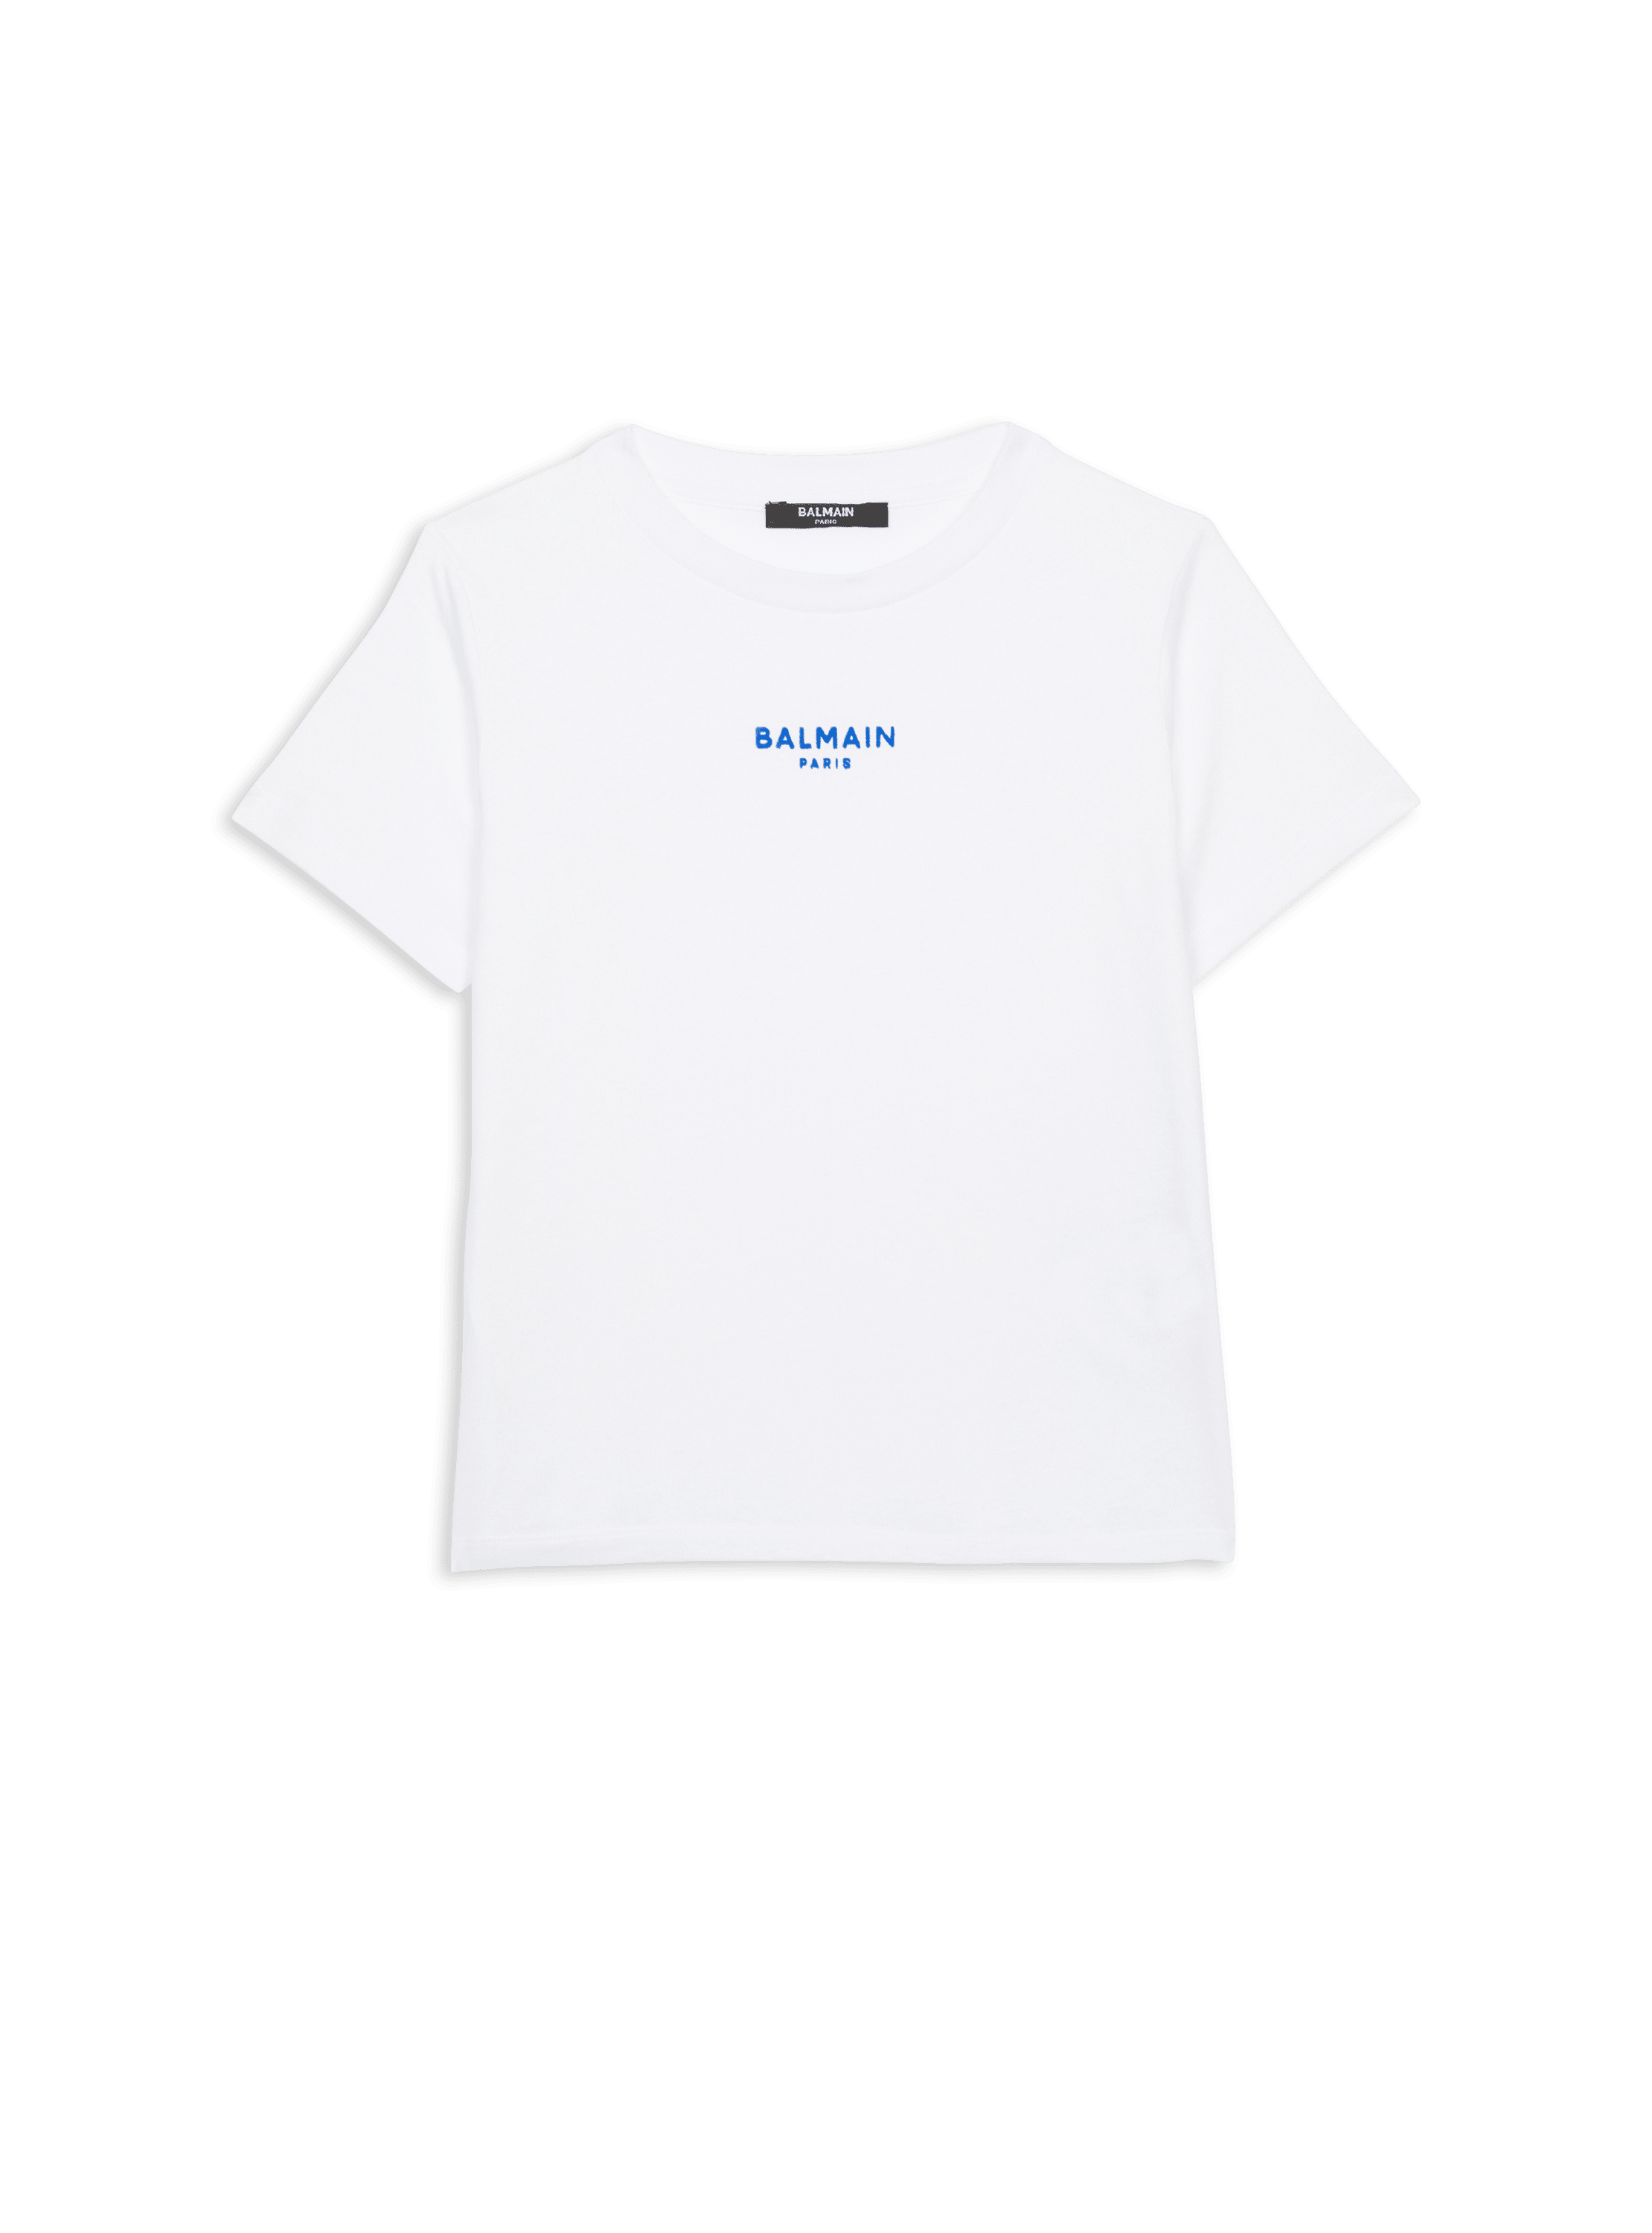 Balmain Paris 플록 장식 티셔츠